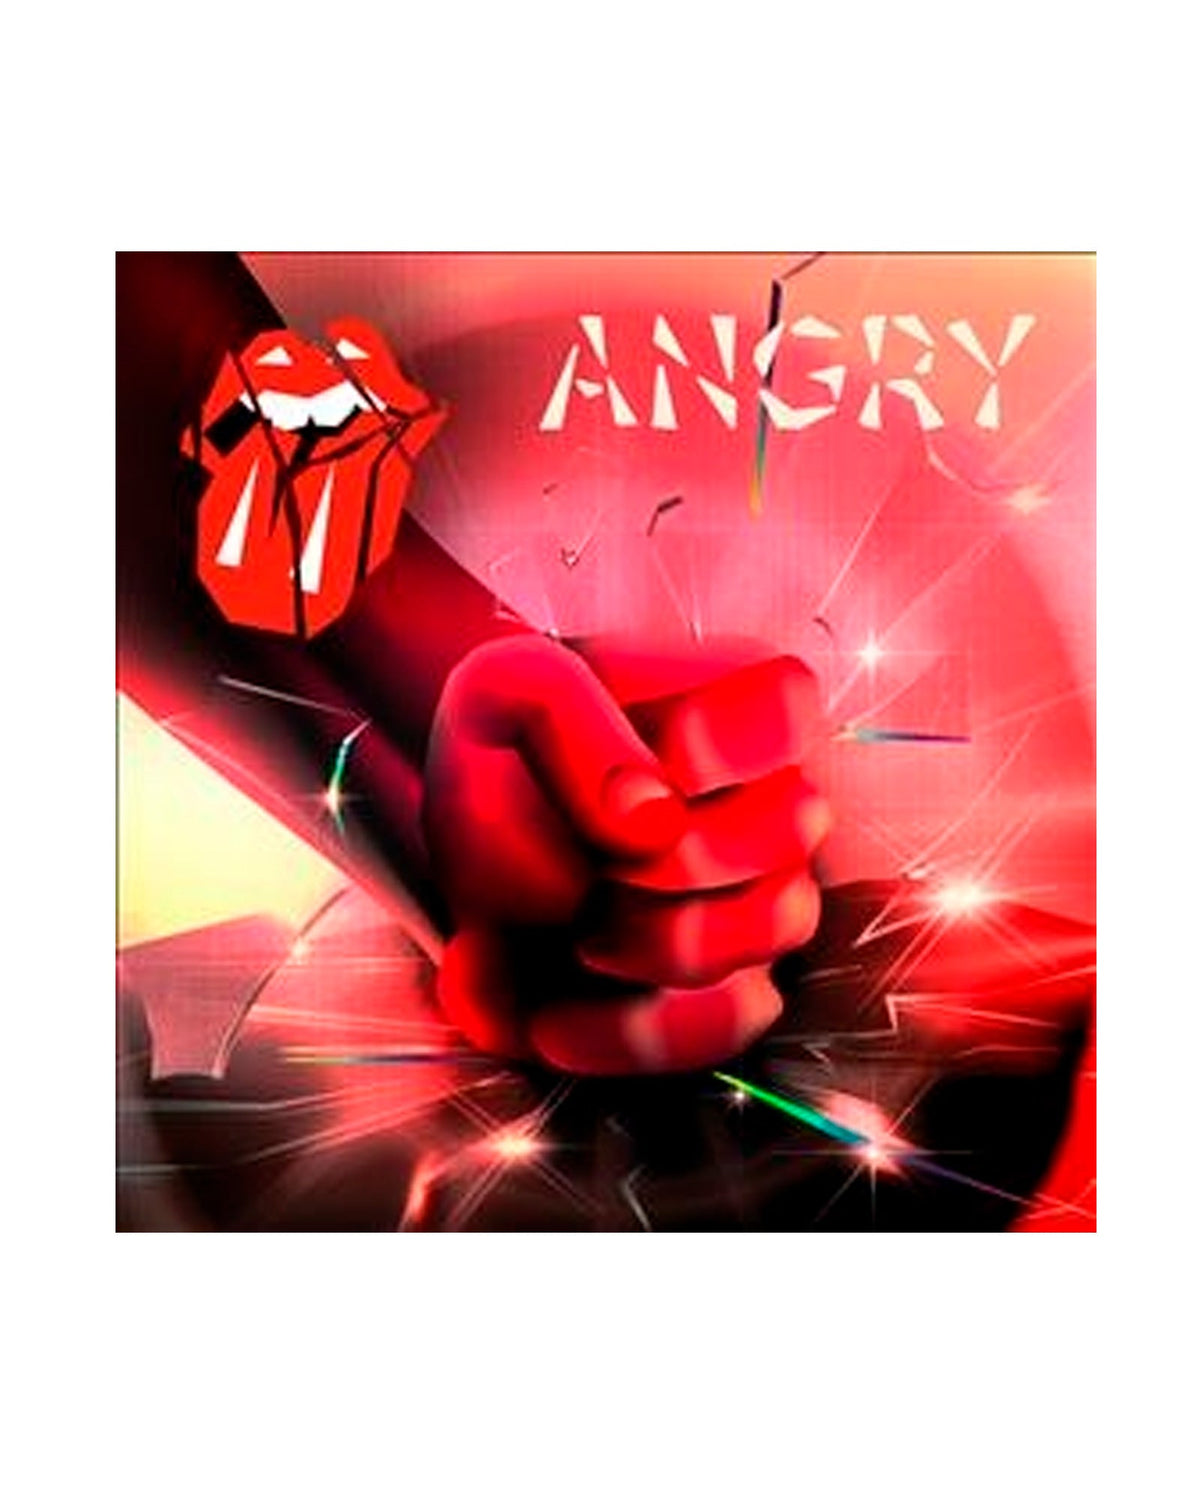 The Rolling Stones - CD Single "Angry" - D2fy · Rocktud - Rocktud